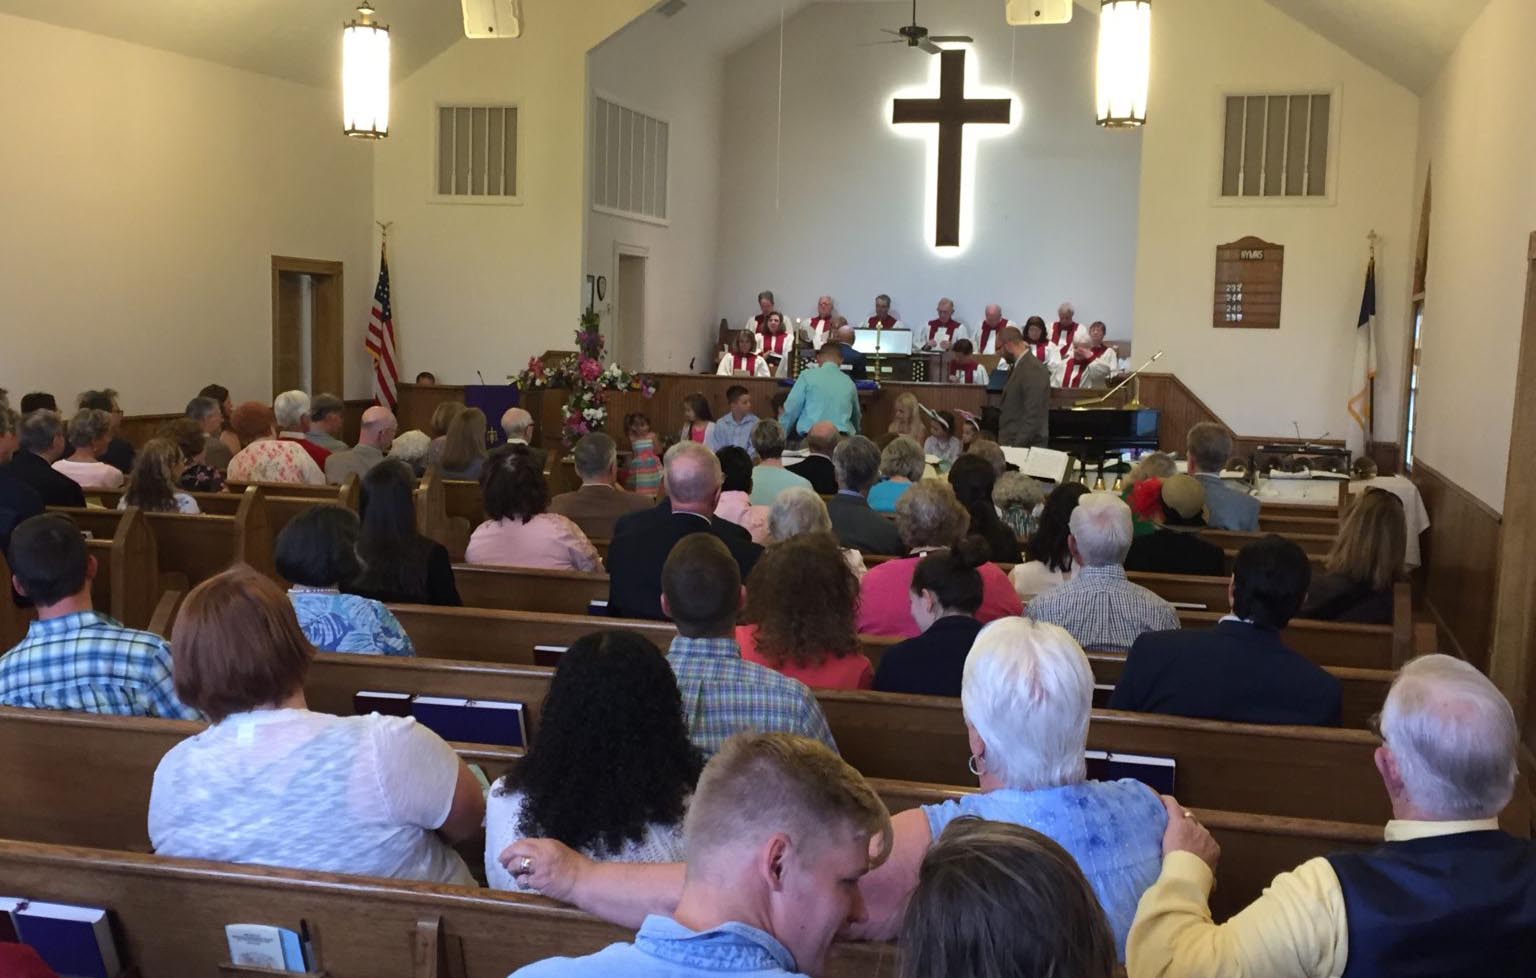 Sunday Worship Service with Communion